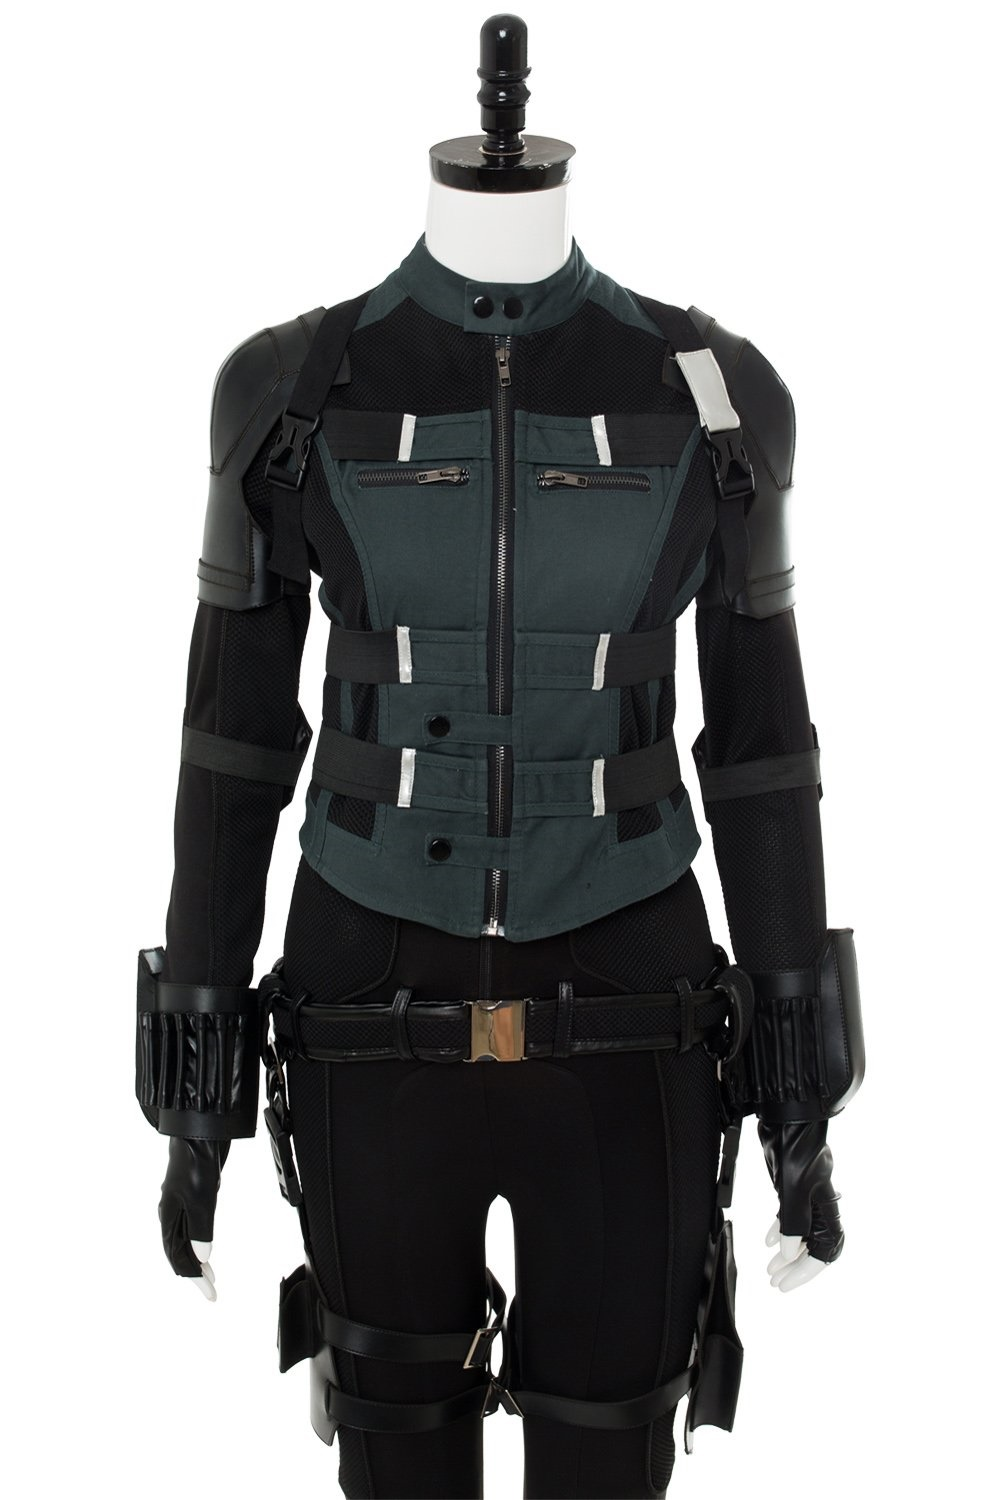 Avengers 3 Infinity War Black Widow Natasha Romanoff Outfit Cosplay Costume Whole Set